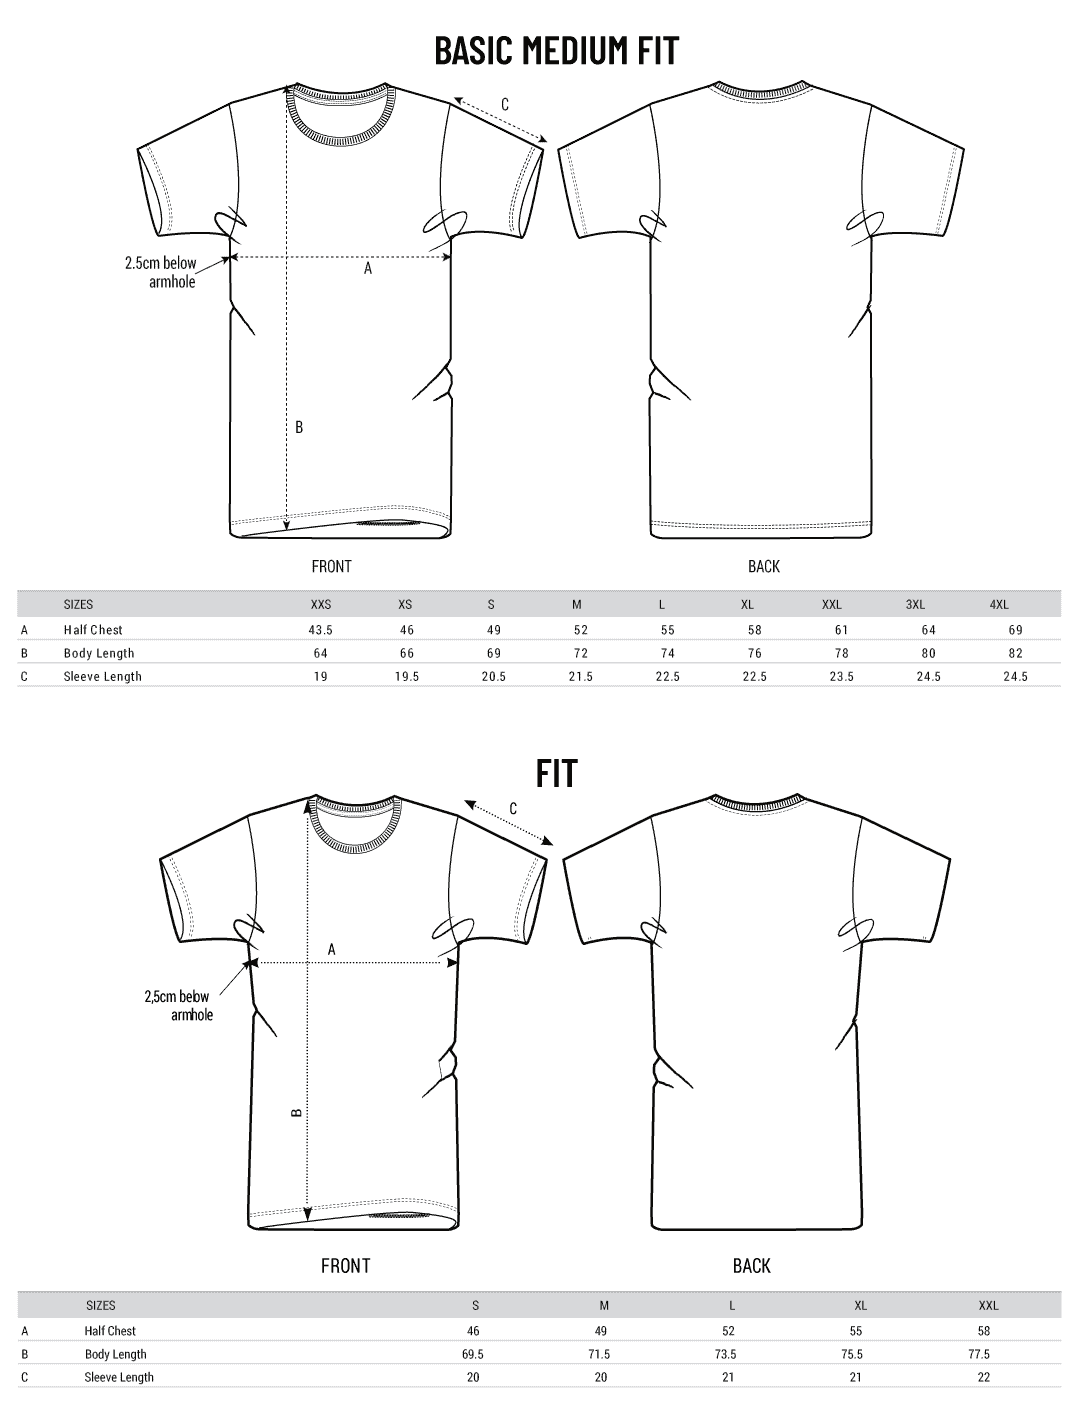 Velo Gravel cintre tordu bicolore' T-shirt premium Homme